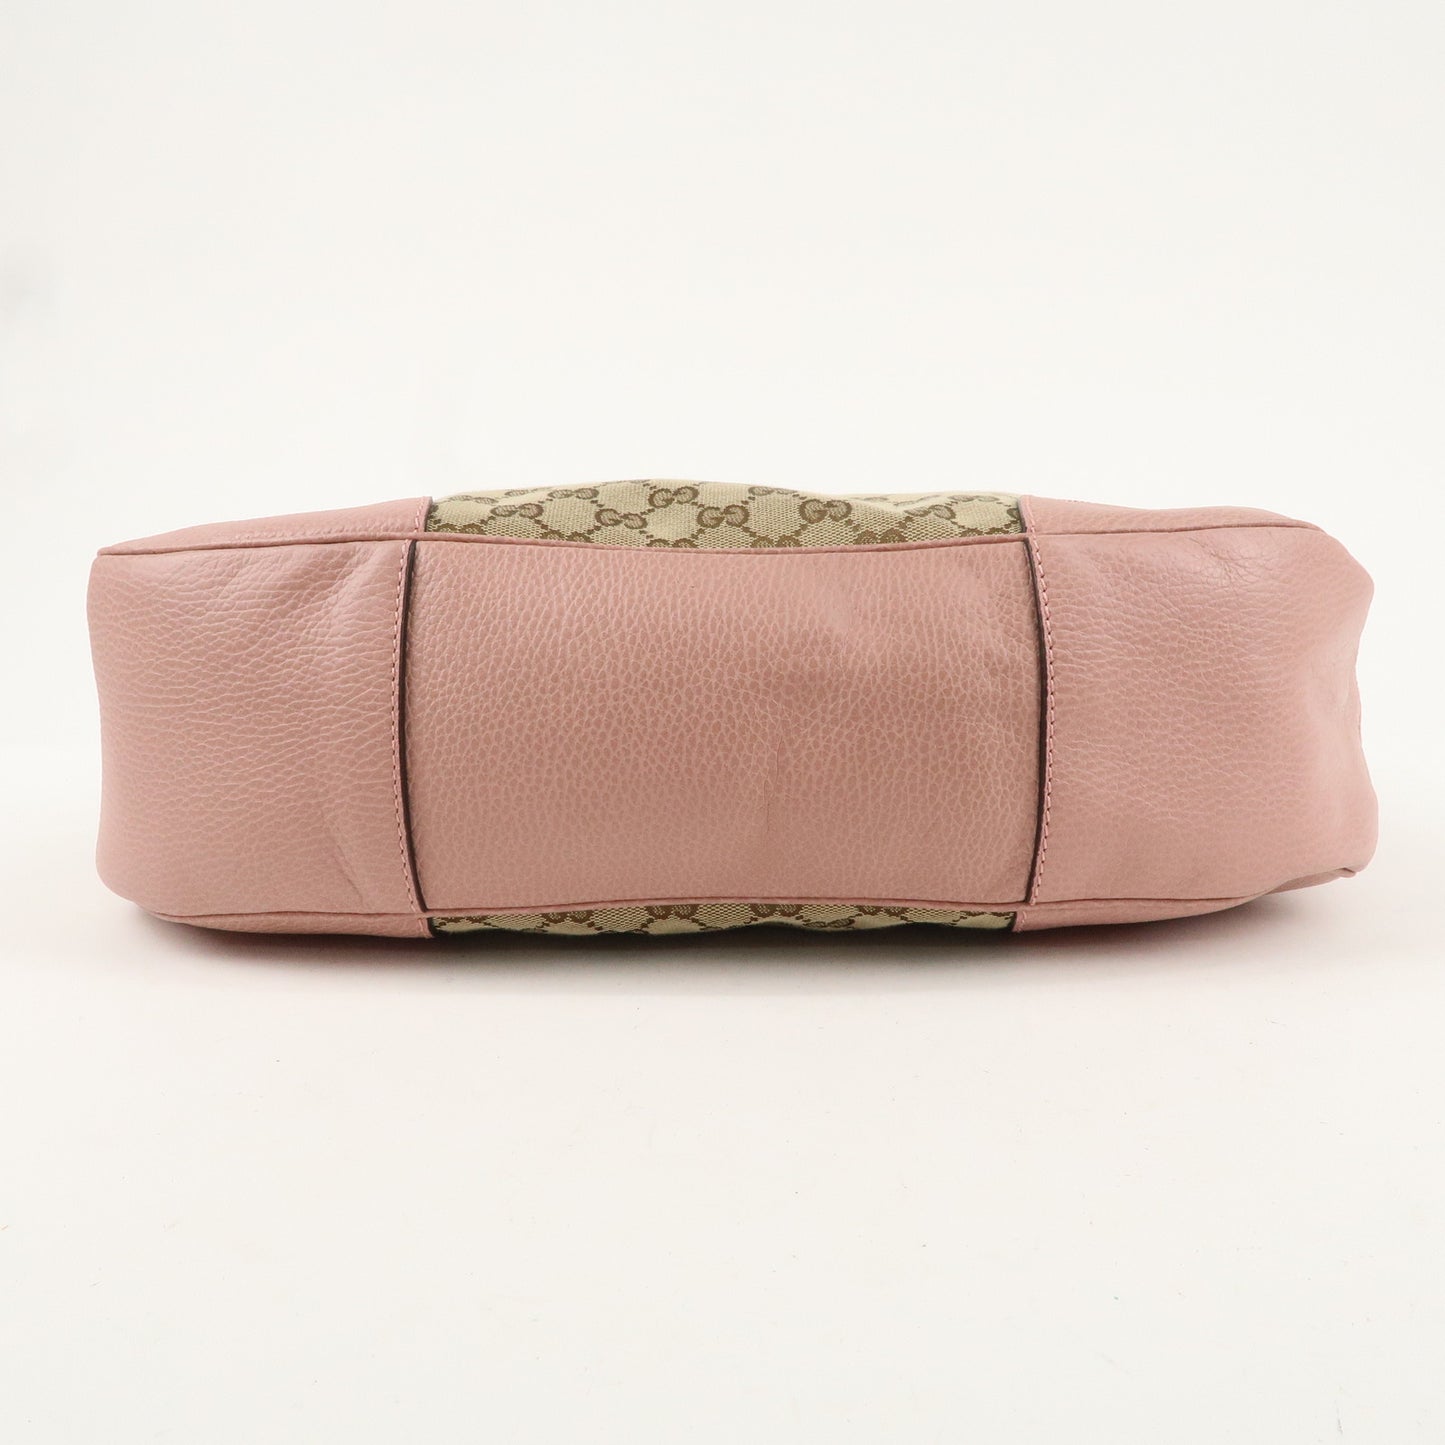 GUCCI GG Canvas Leather One Shoulder Bag Pink Beige 449244